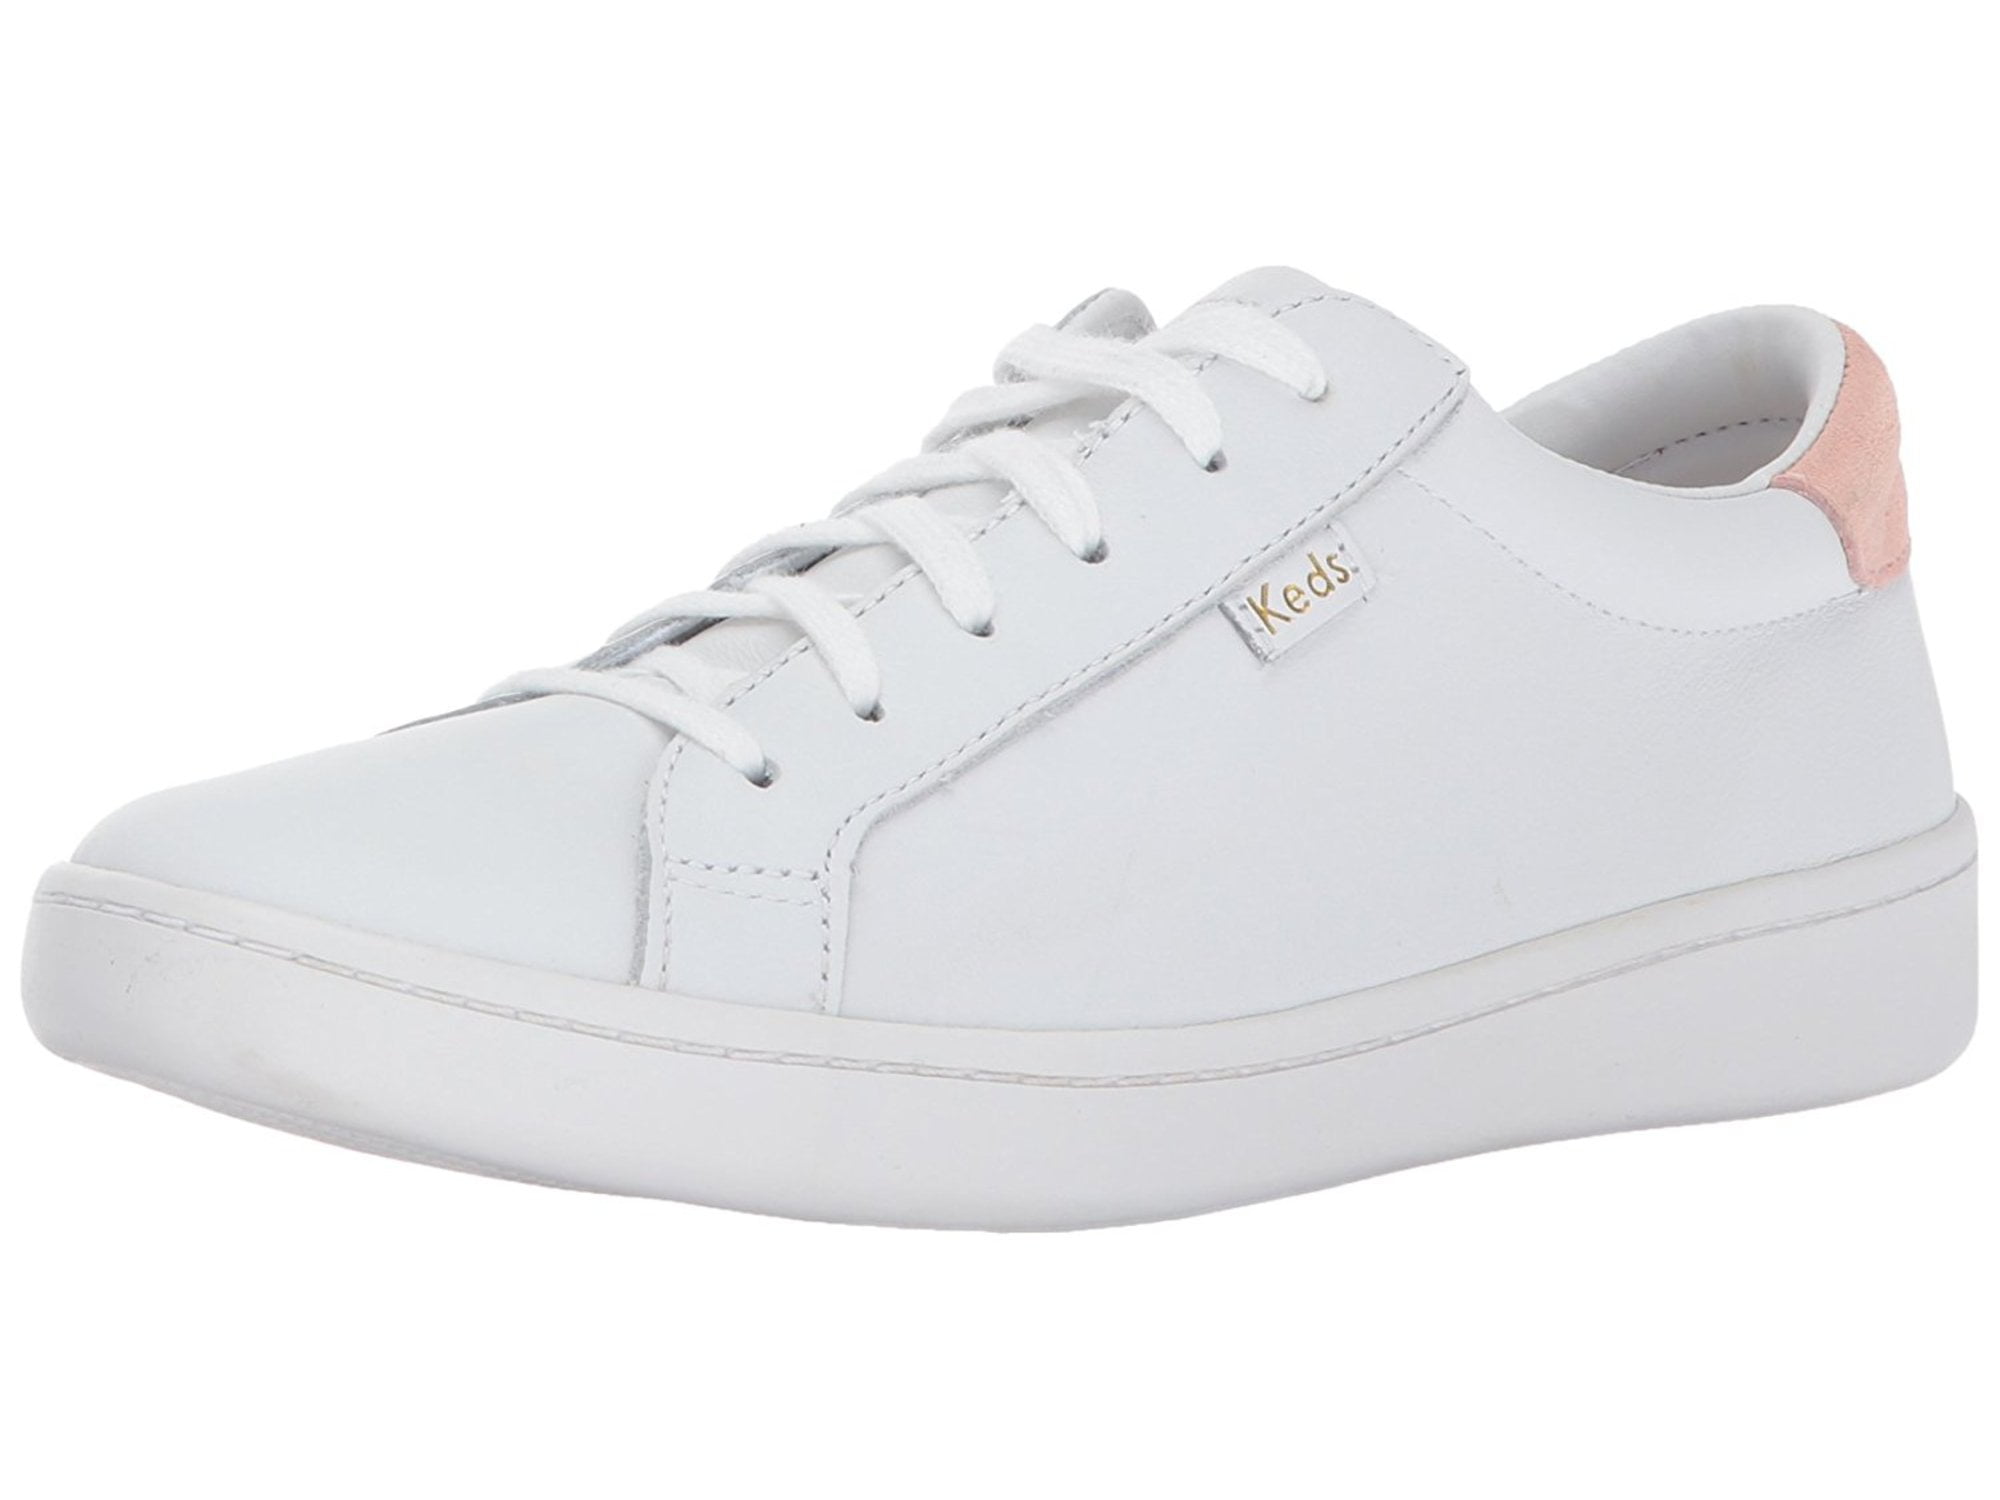 white keds shoes